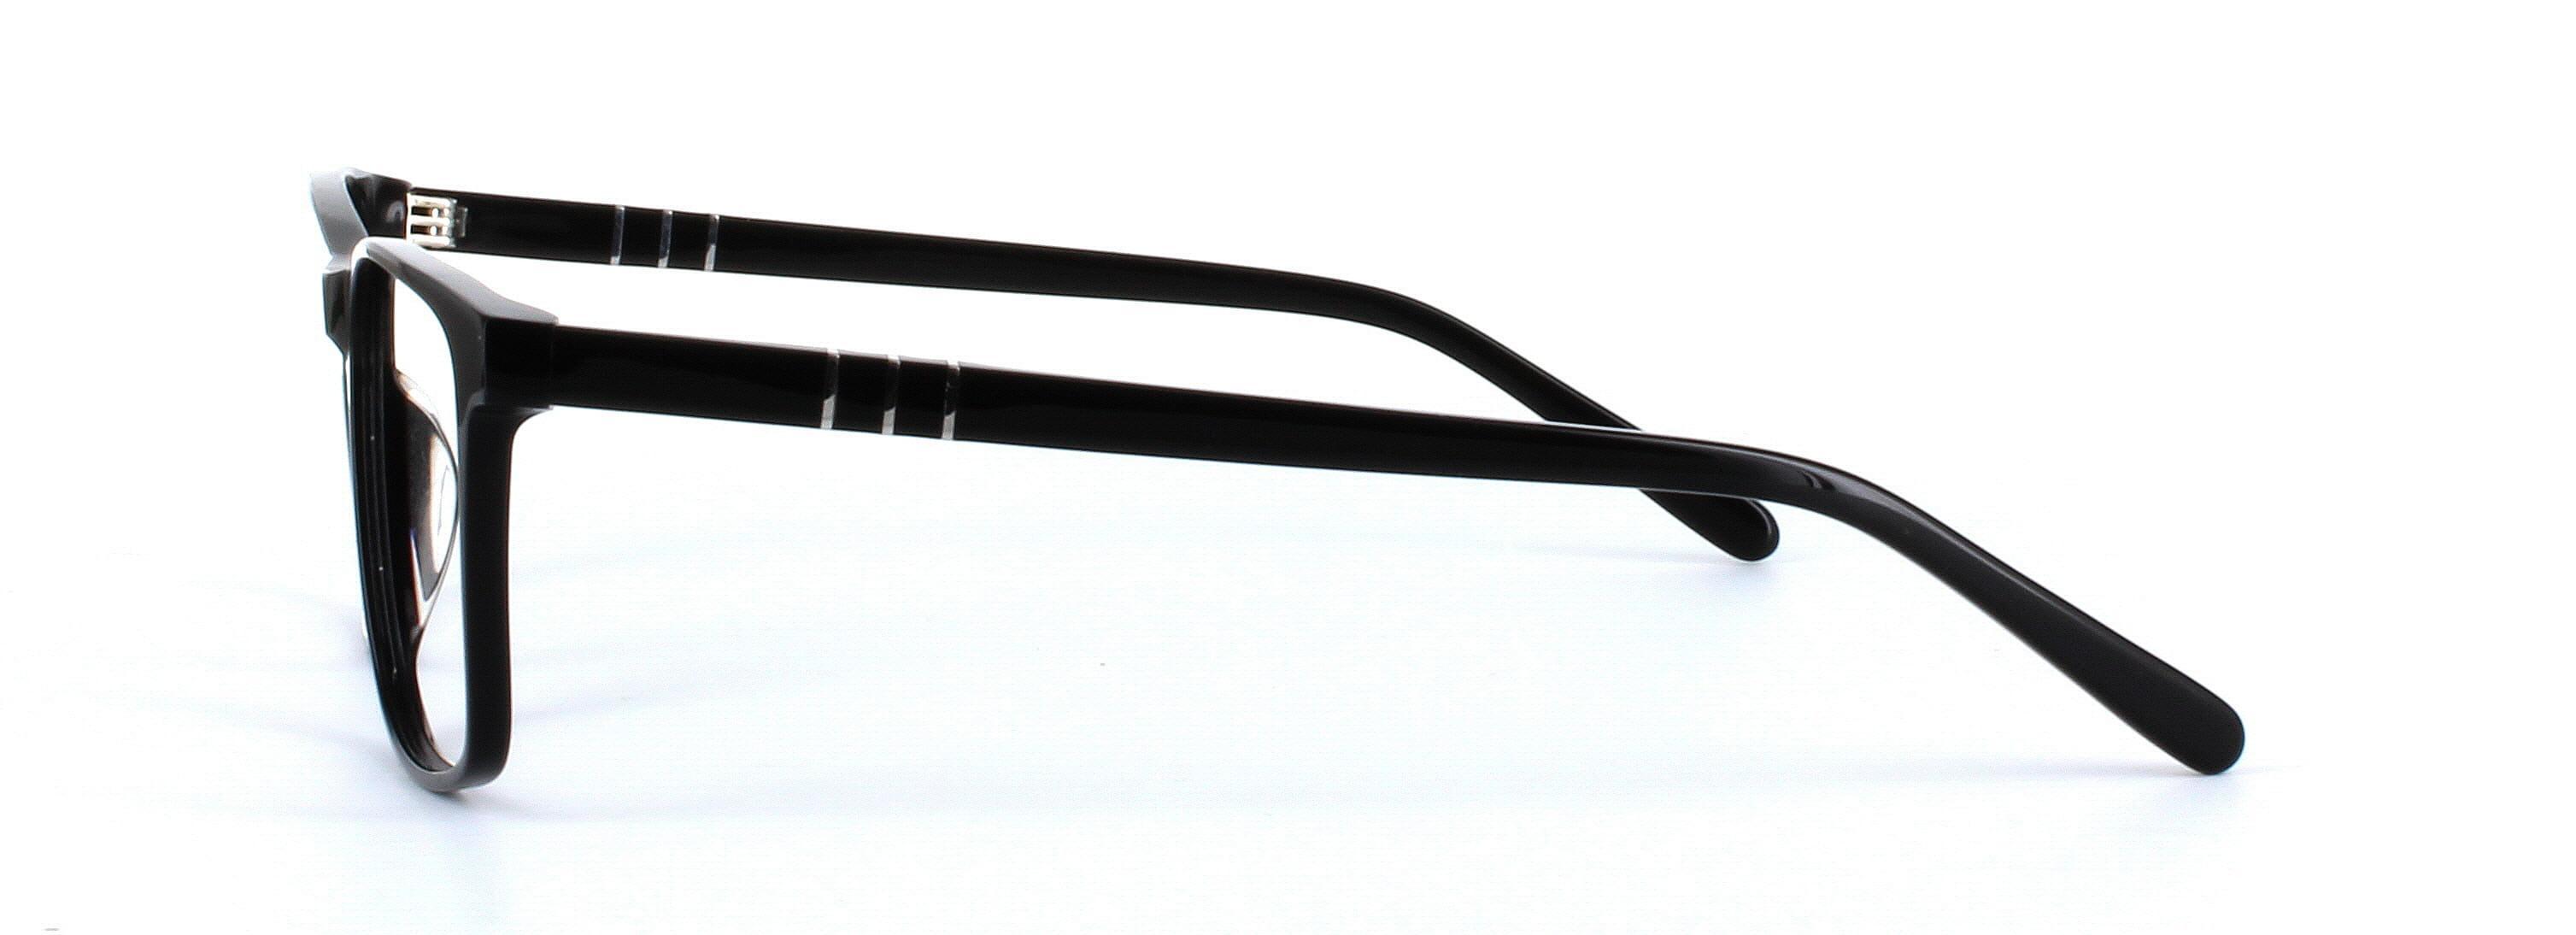 Bayley Lane Black Full Rim Rectangular Acetate Glasses - Image View 2